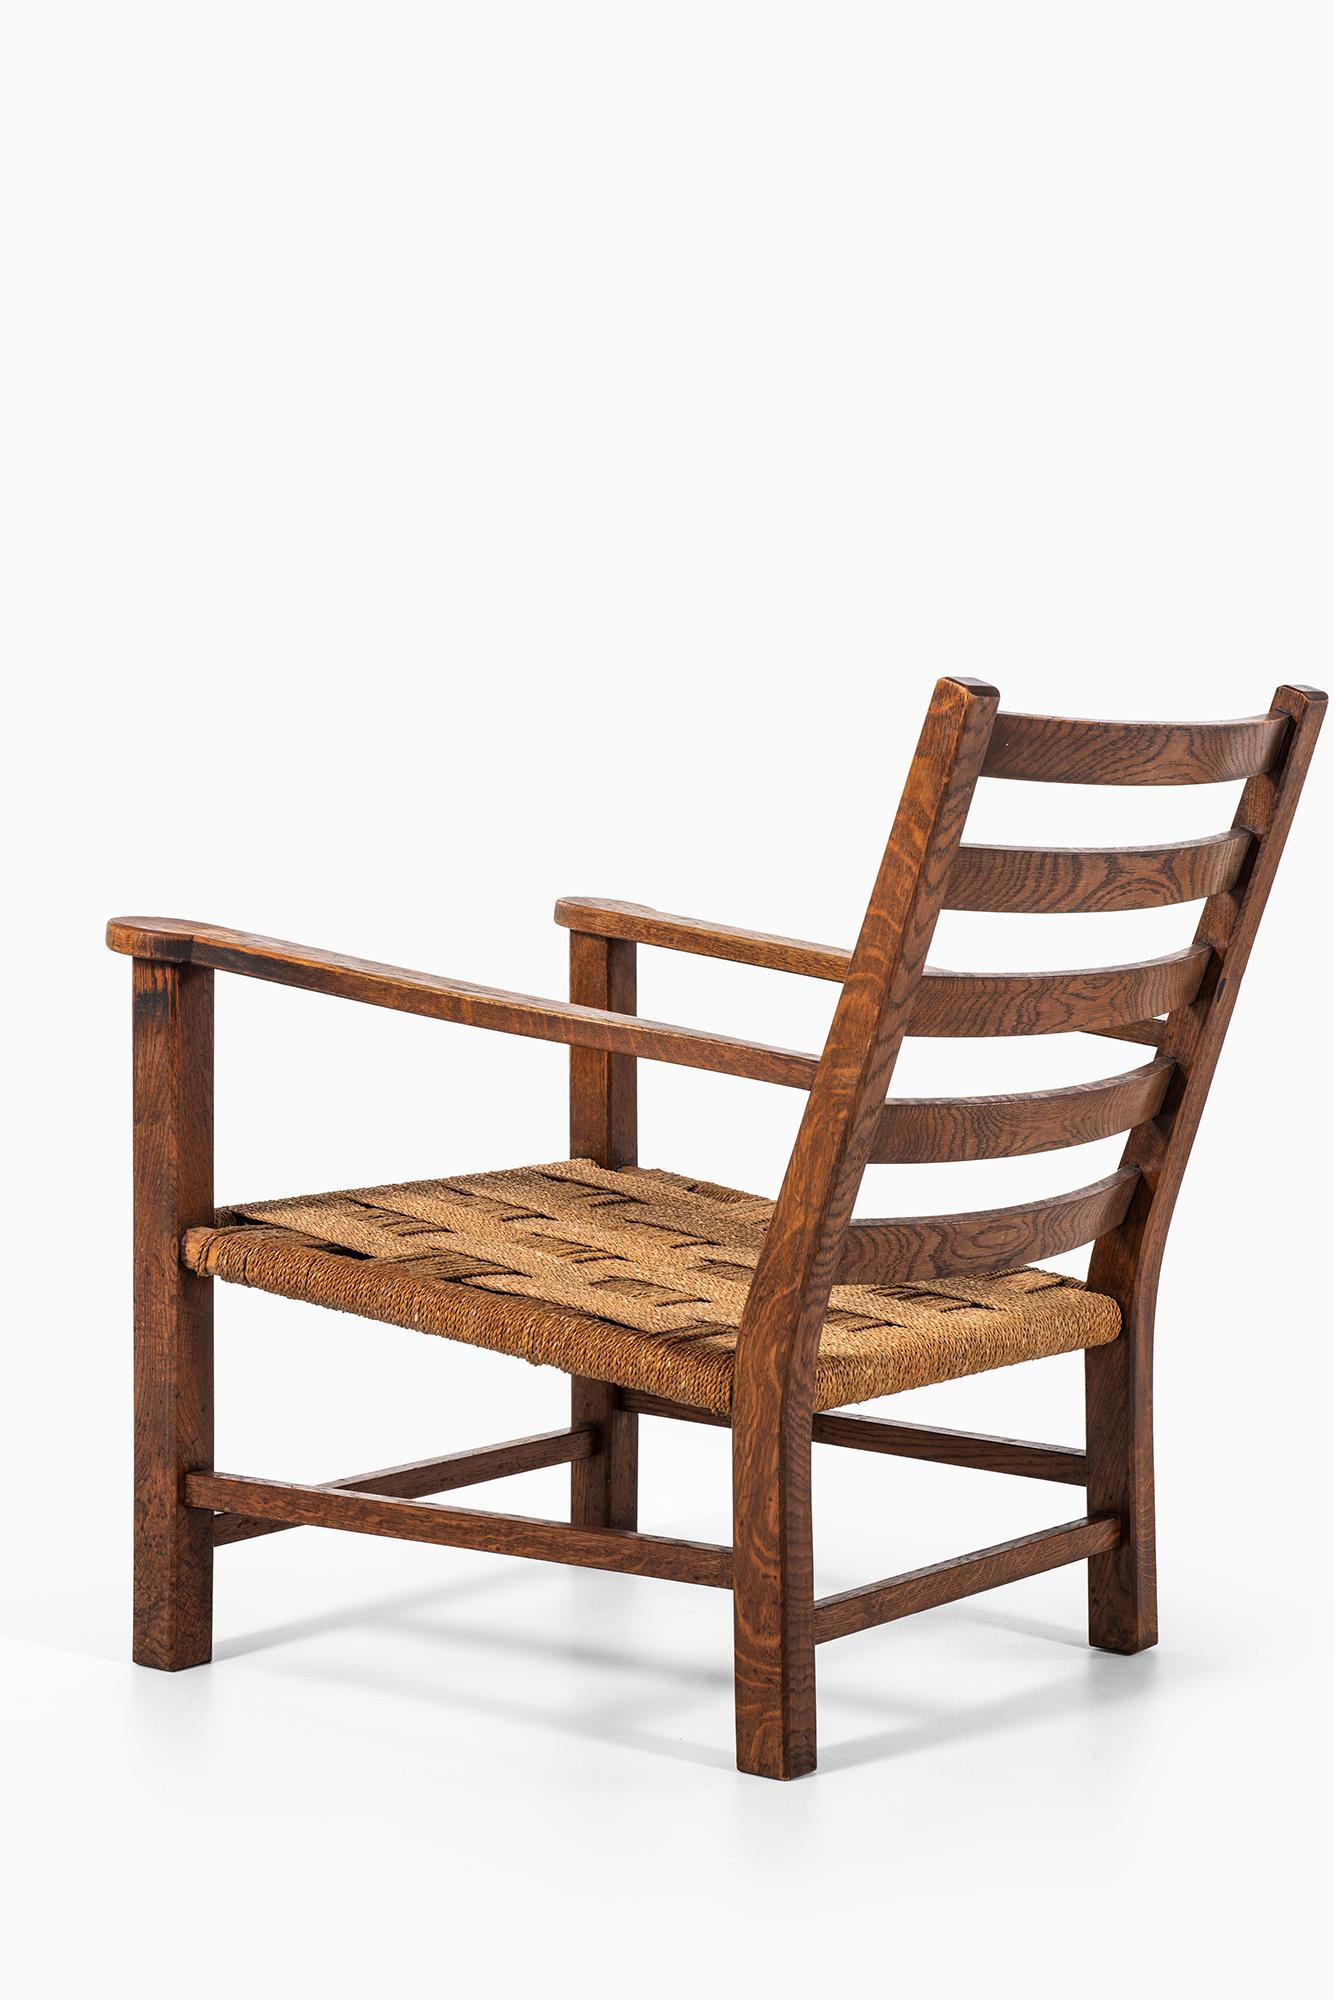 Swedish 1940s Easy Chairs in Oak and Hemp String